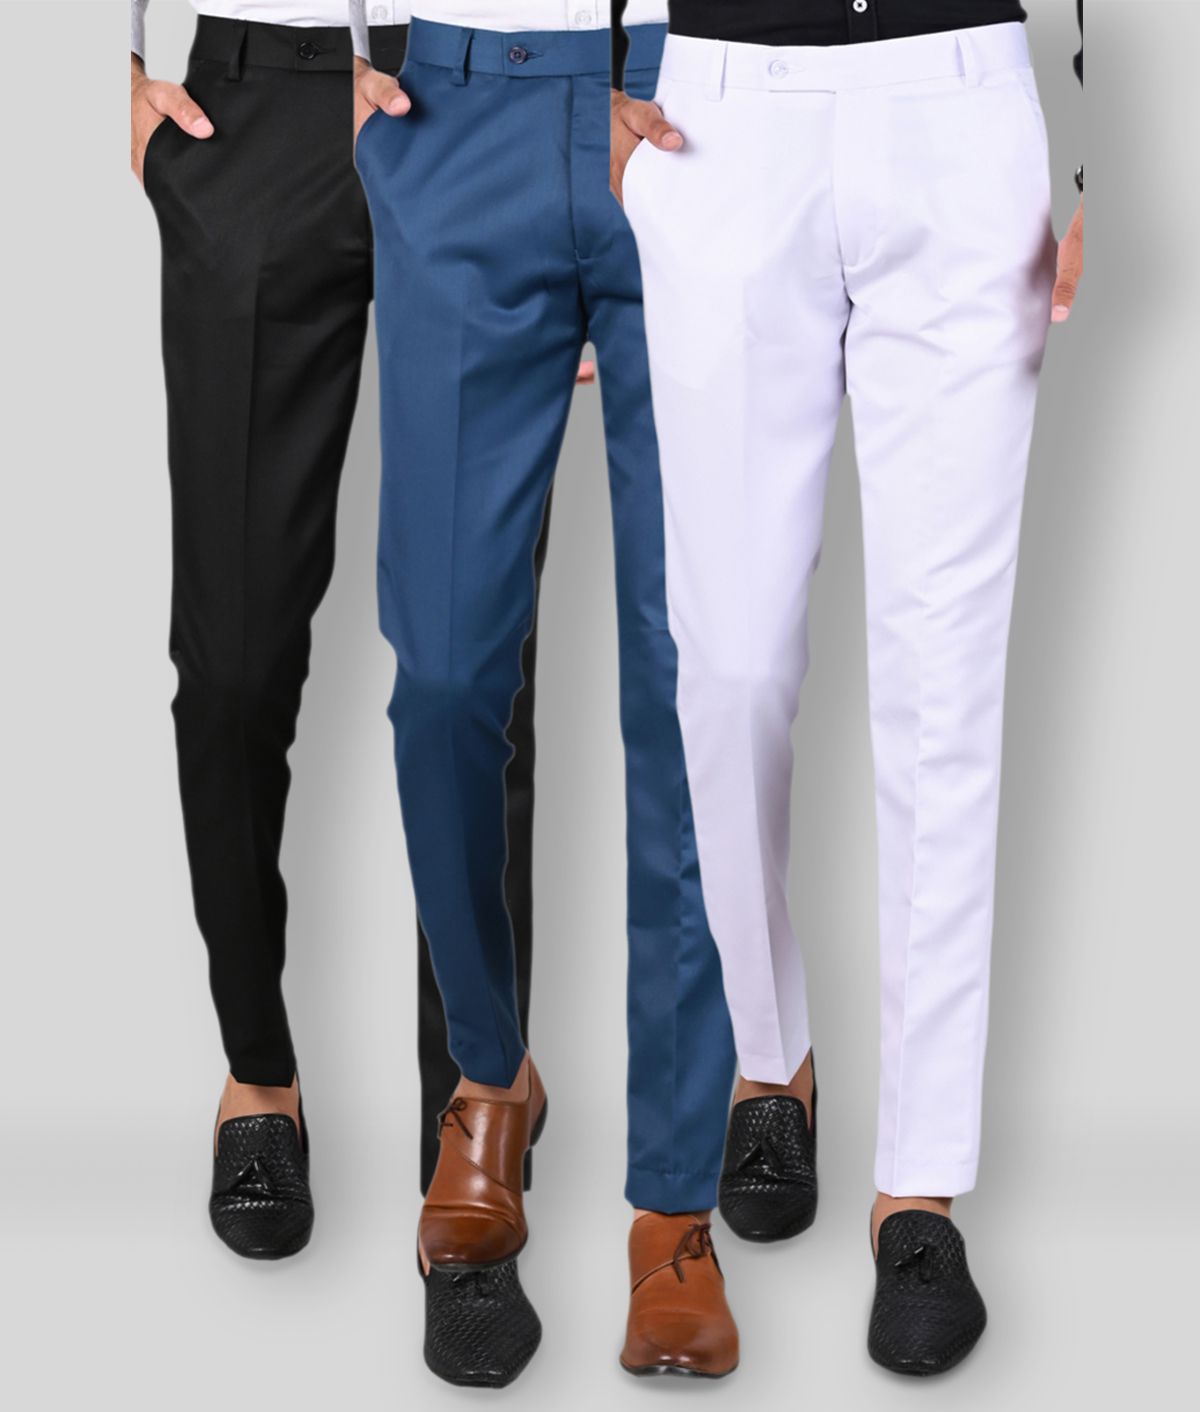 MANCREW - Black Polycotton Slim - Fit Men's Formal Pants ( Pack of 3 )